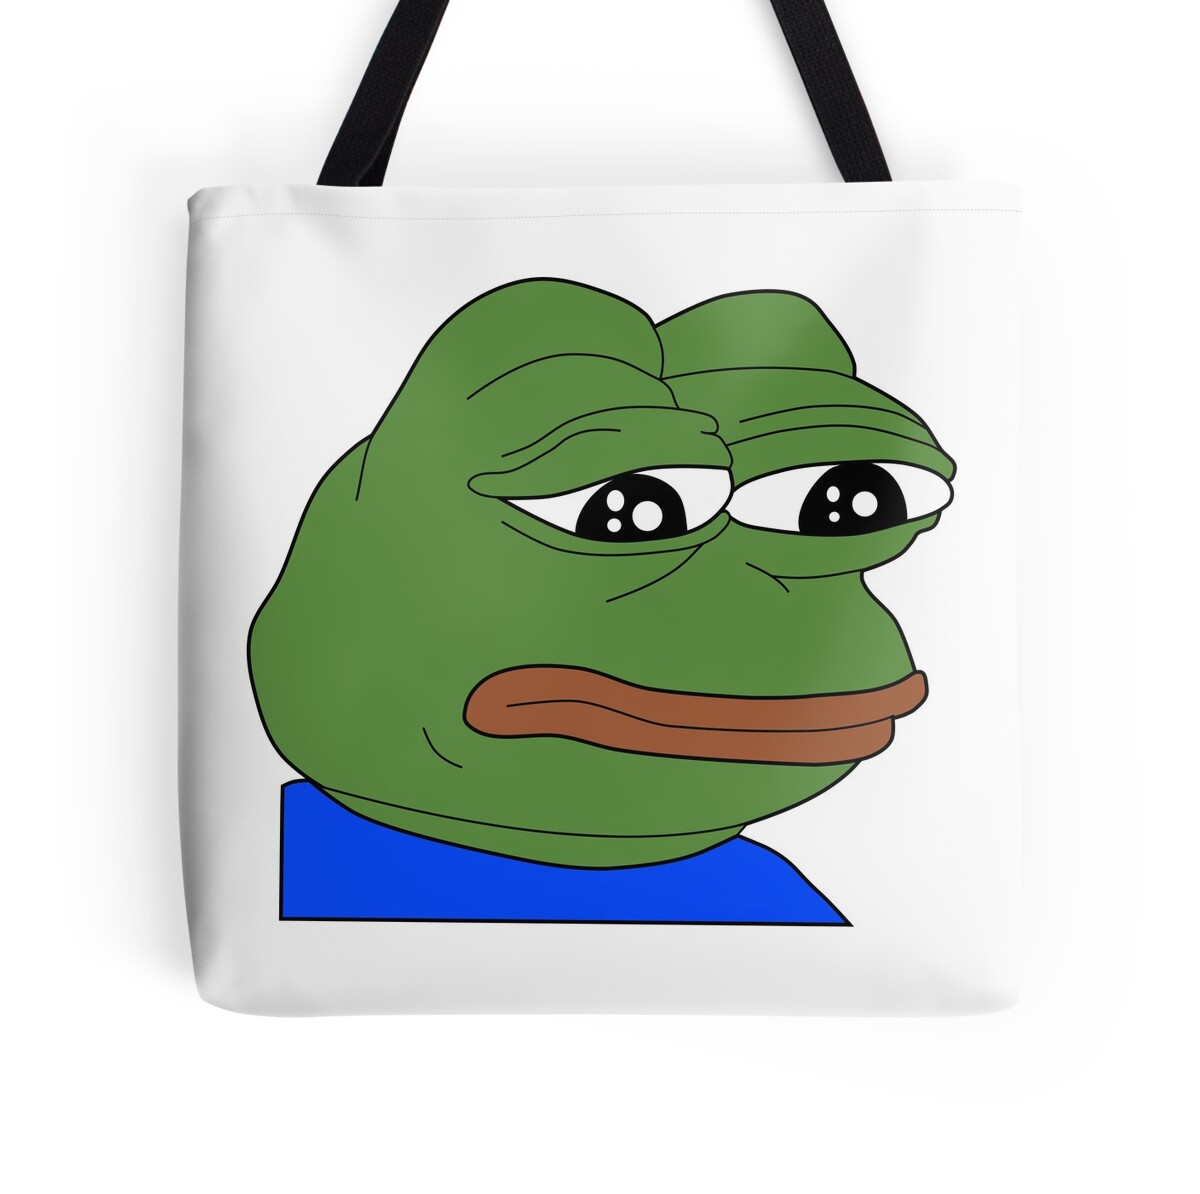  Rare Sad  Pepe  Frog  Meme  Print Tote Bags by budgetnudest 